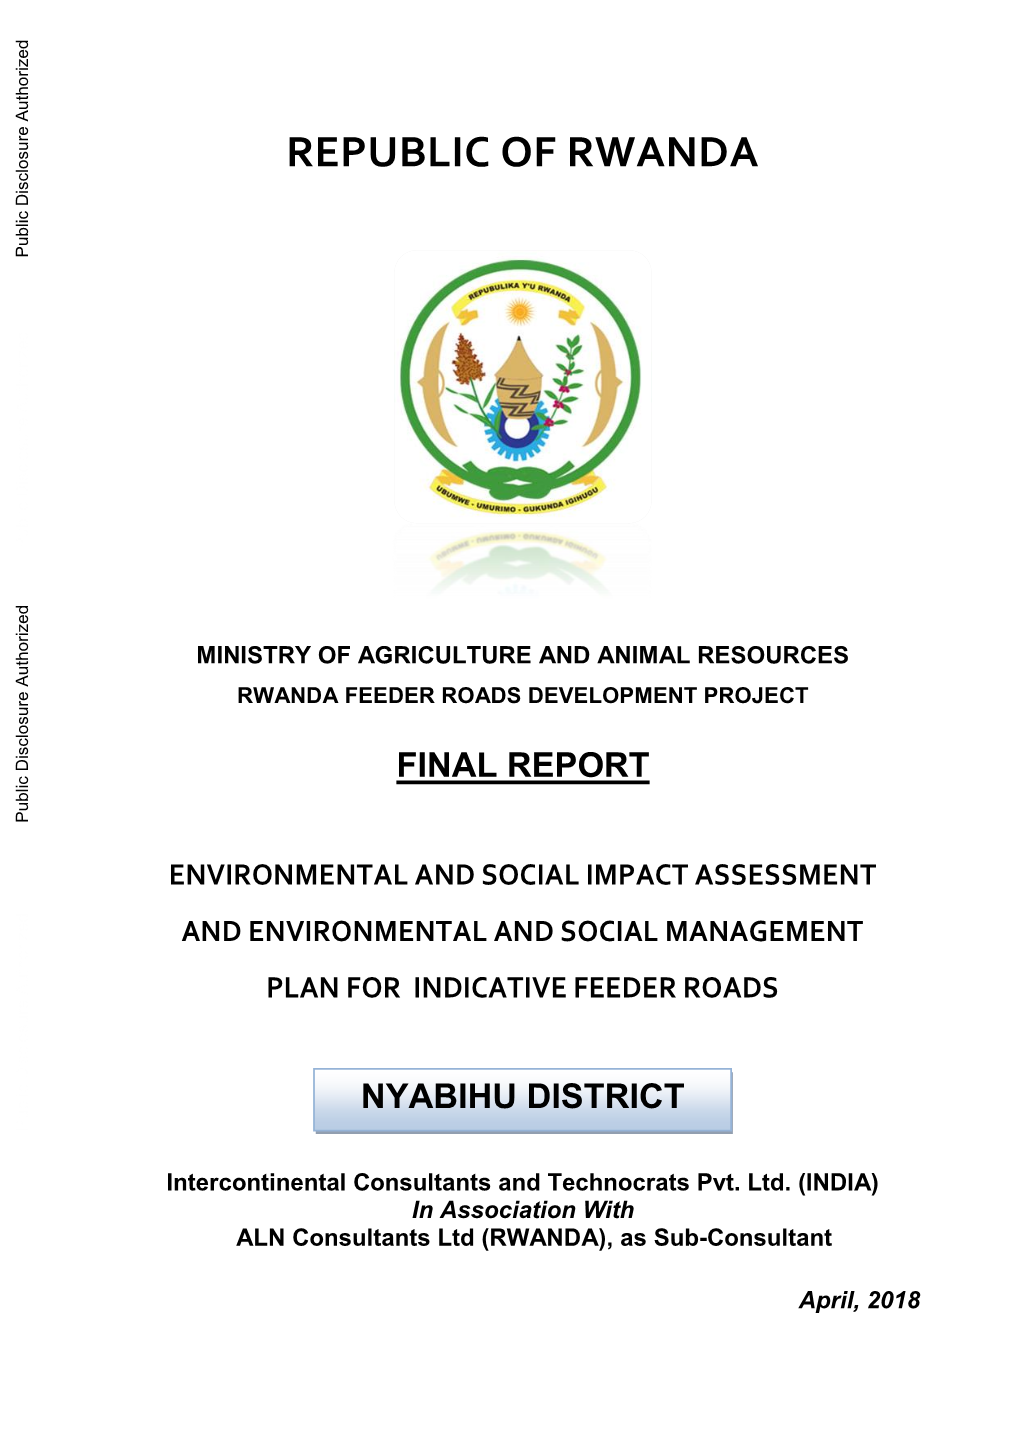 Environmental-And-Social-Impact-Assessment-Of-Nyabihu-District.Pdf